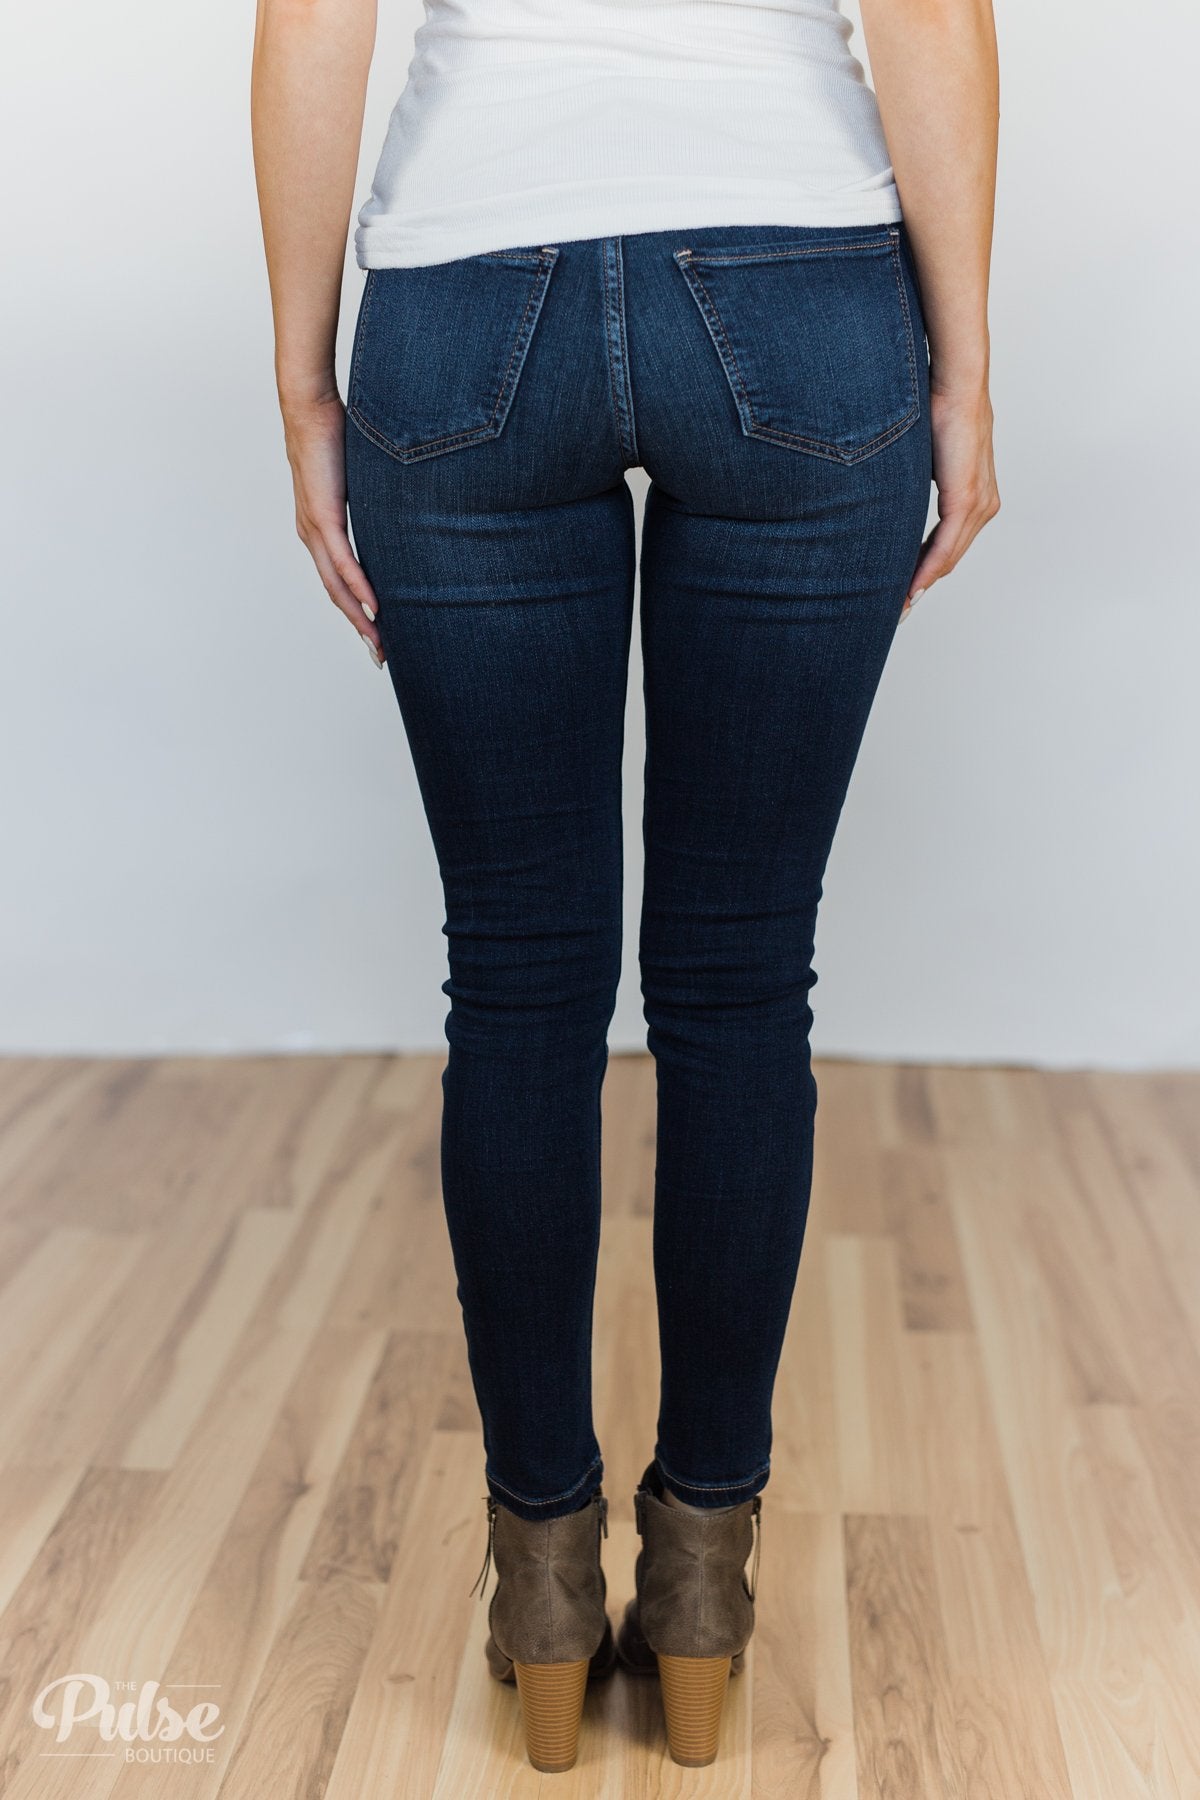 Sneak Peek Jeans- Claire Wash